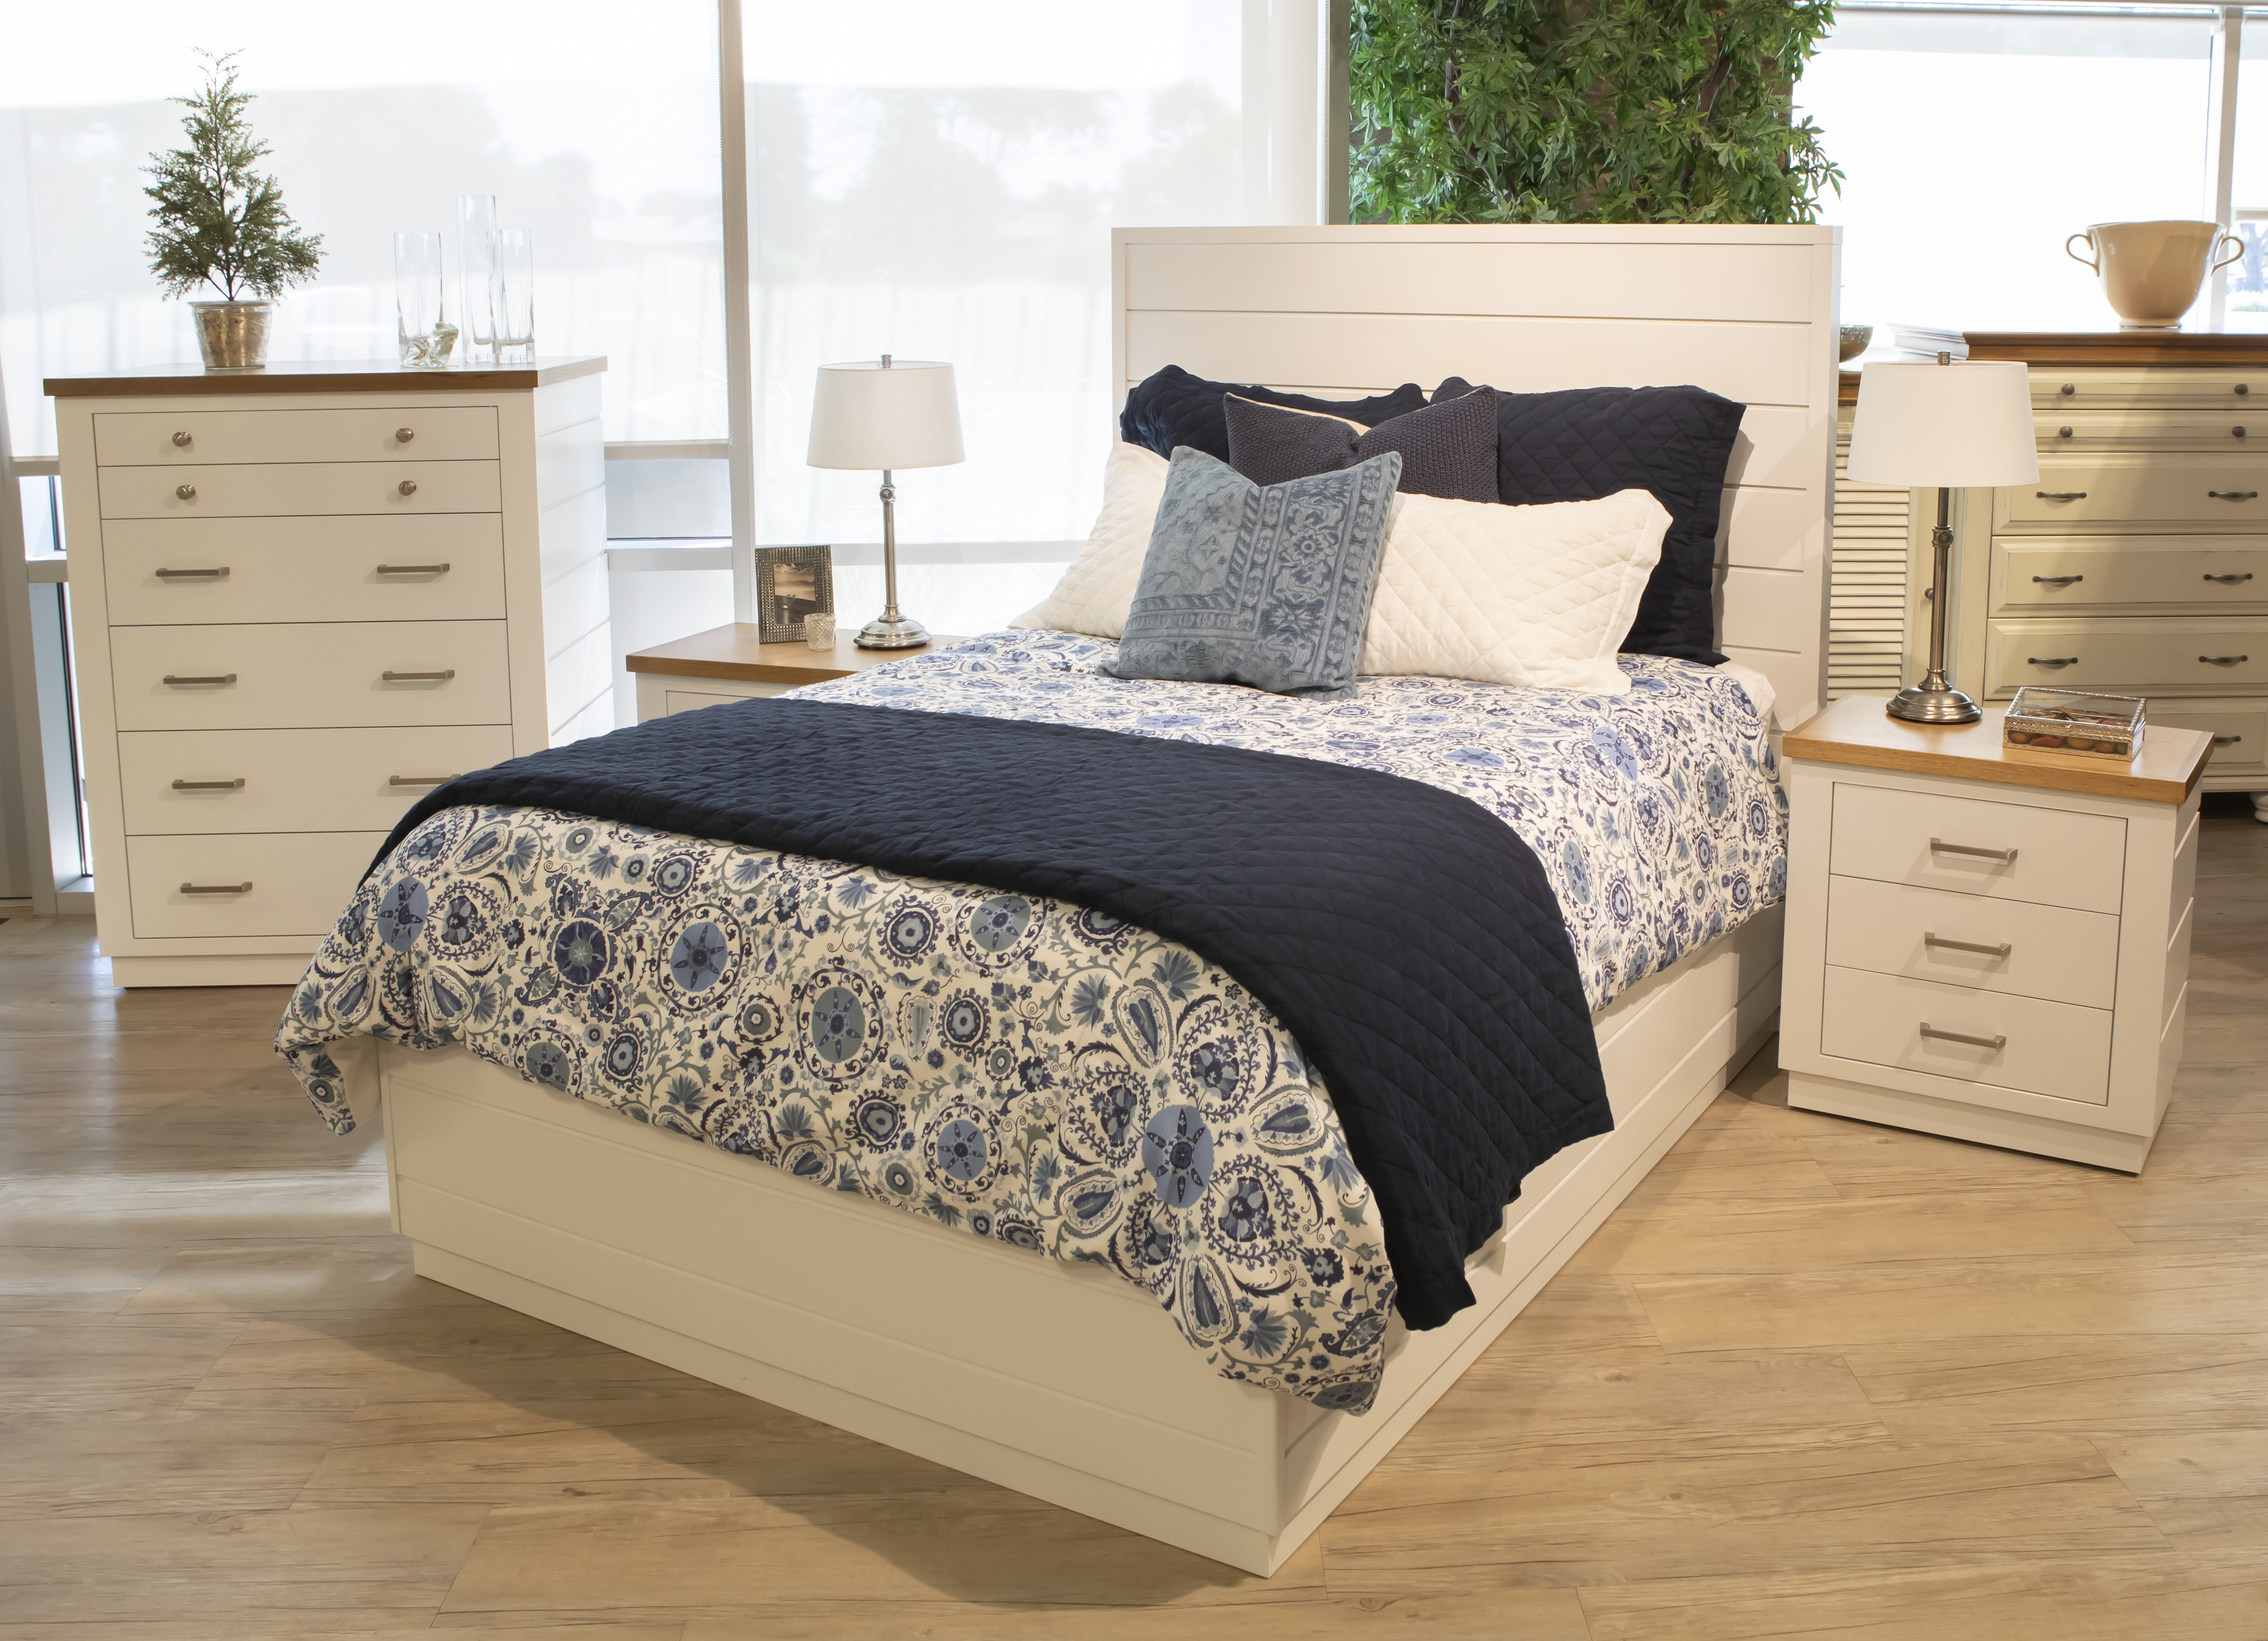 shiplap-bedroom-furniture-nightstand-white-shaker